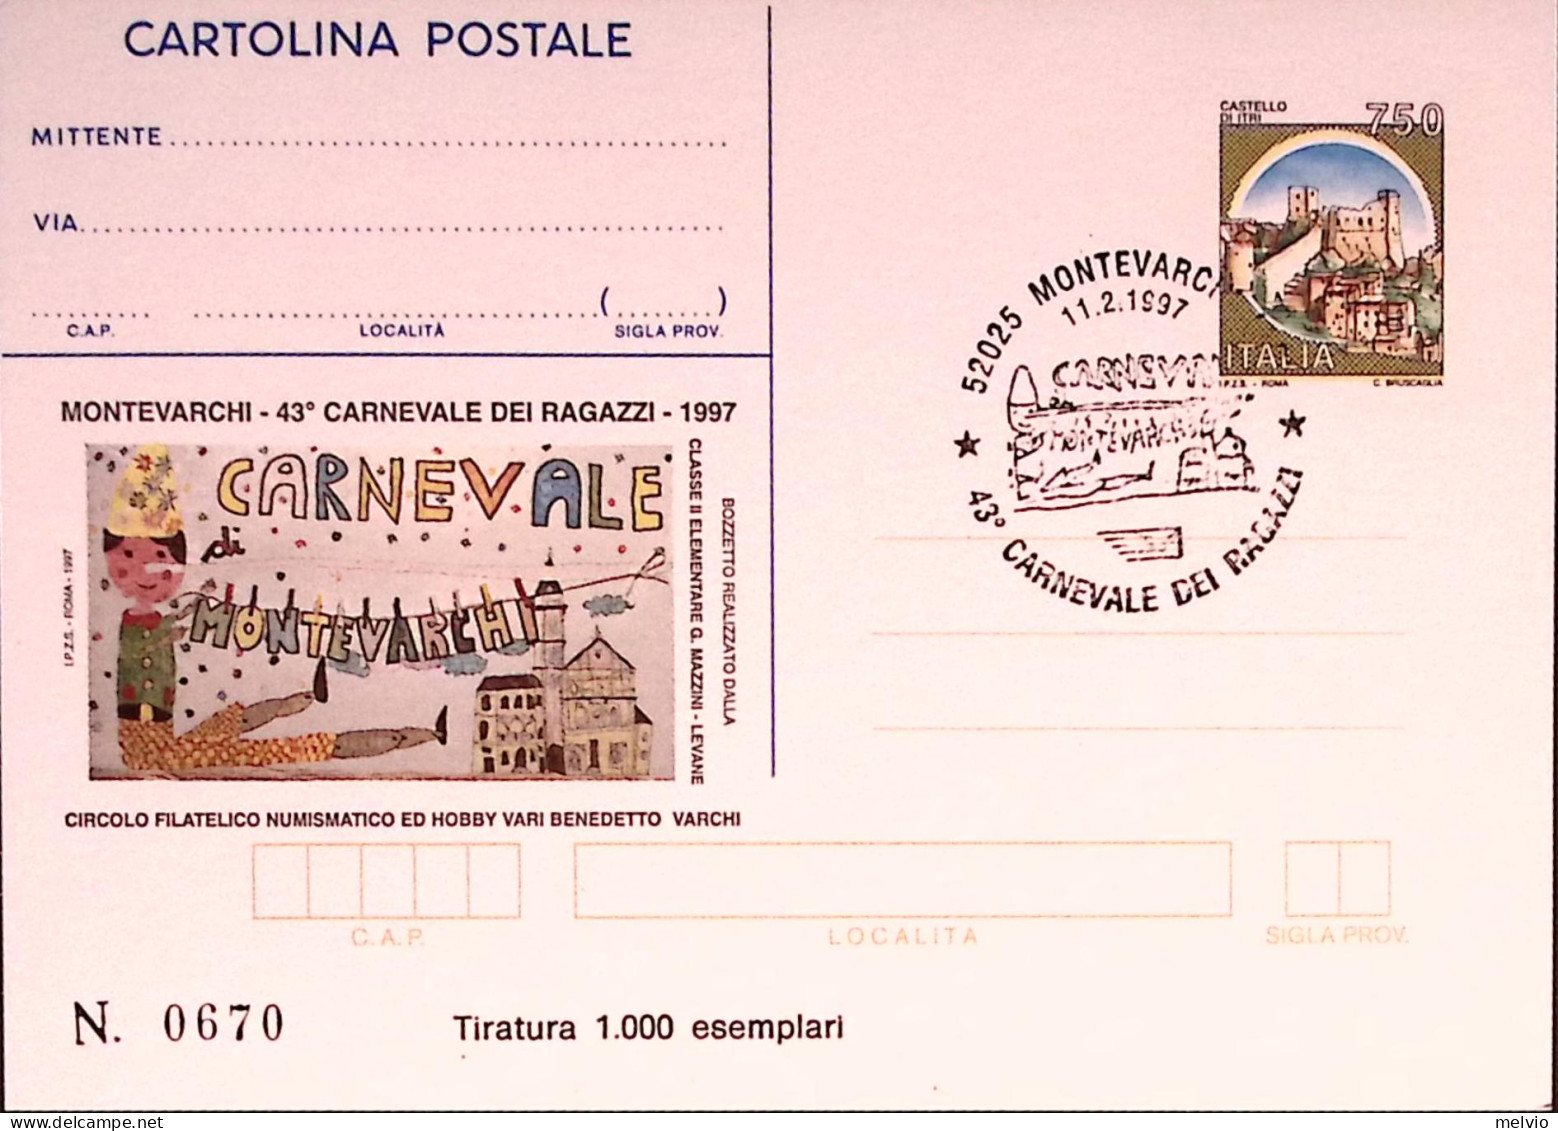 1997-MONTEVARCHI-CARNEVALE Cartolina Postale IPZS Lire 750 Ann Spec - Interi Postali